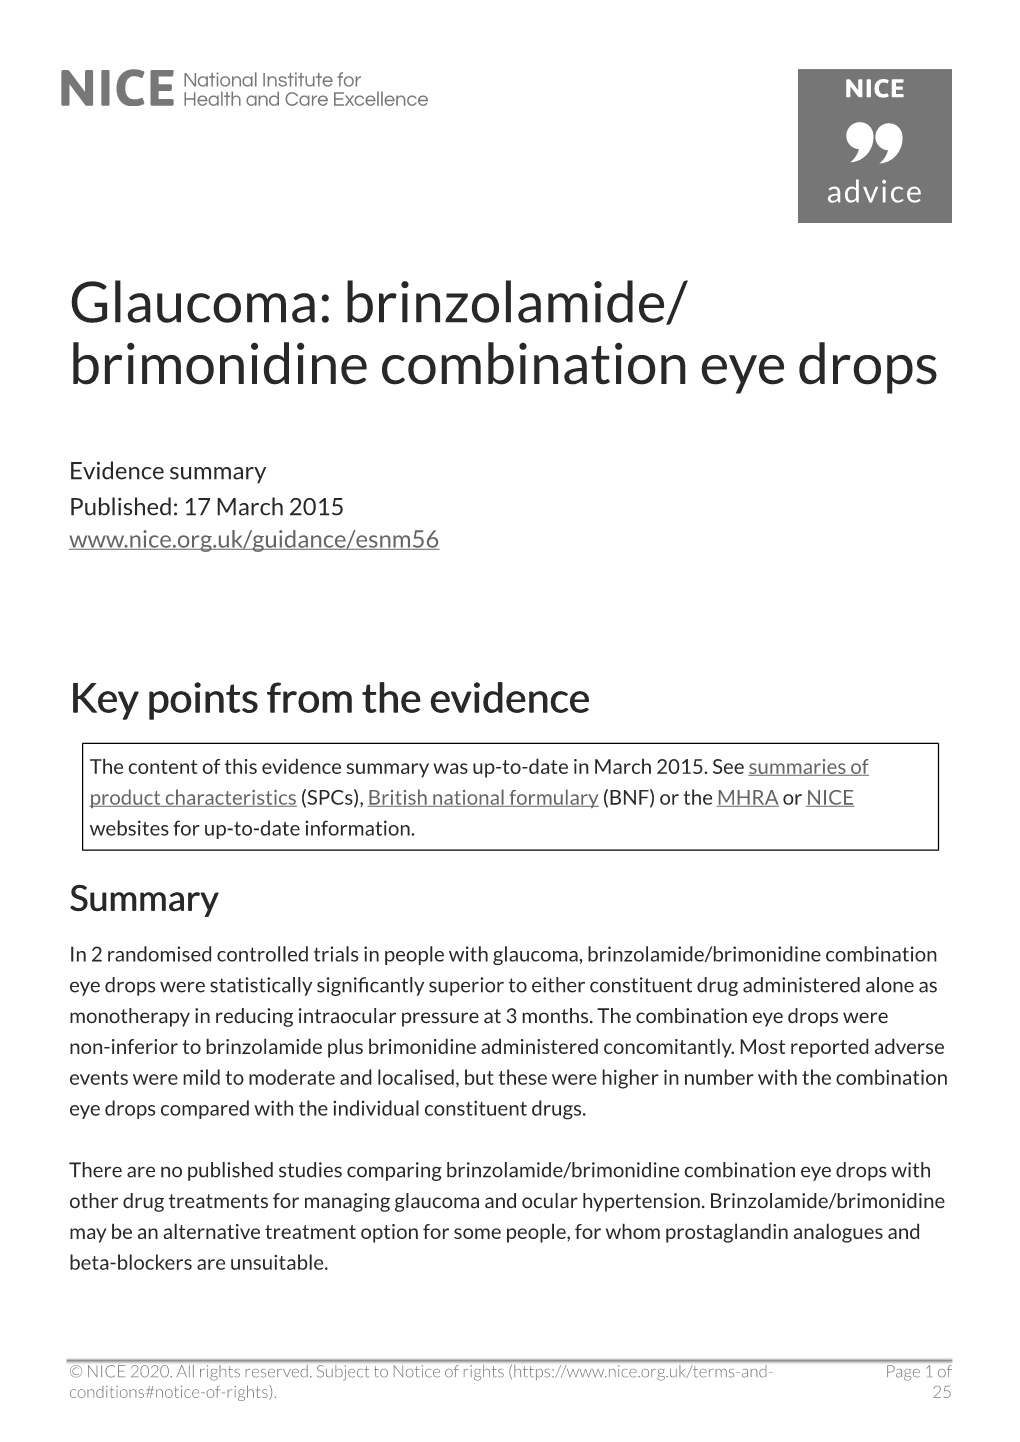 Glaucoma: Brinzolamide/Brimonidine Combination Eye Drops (ESNM56)